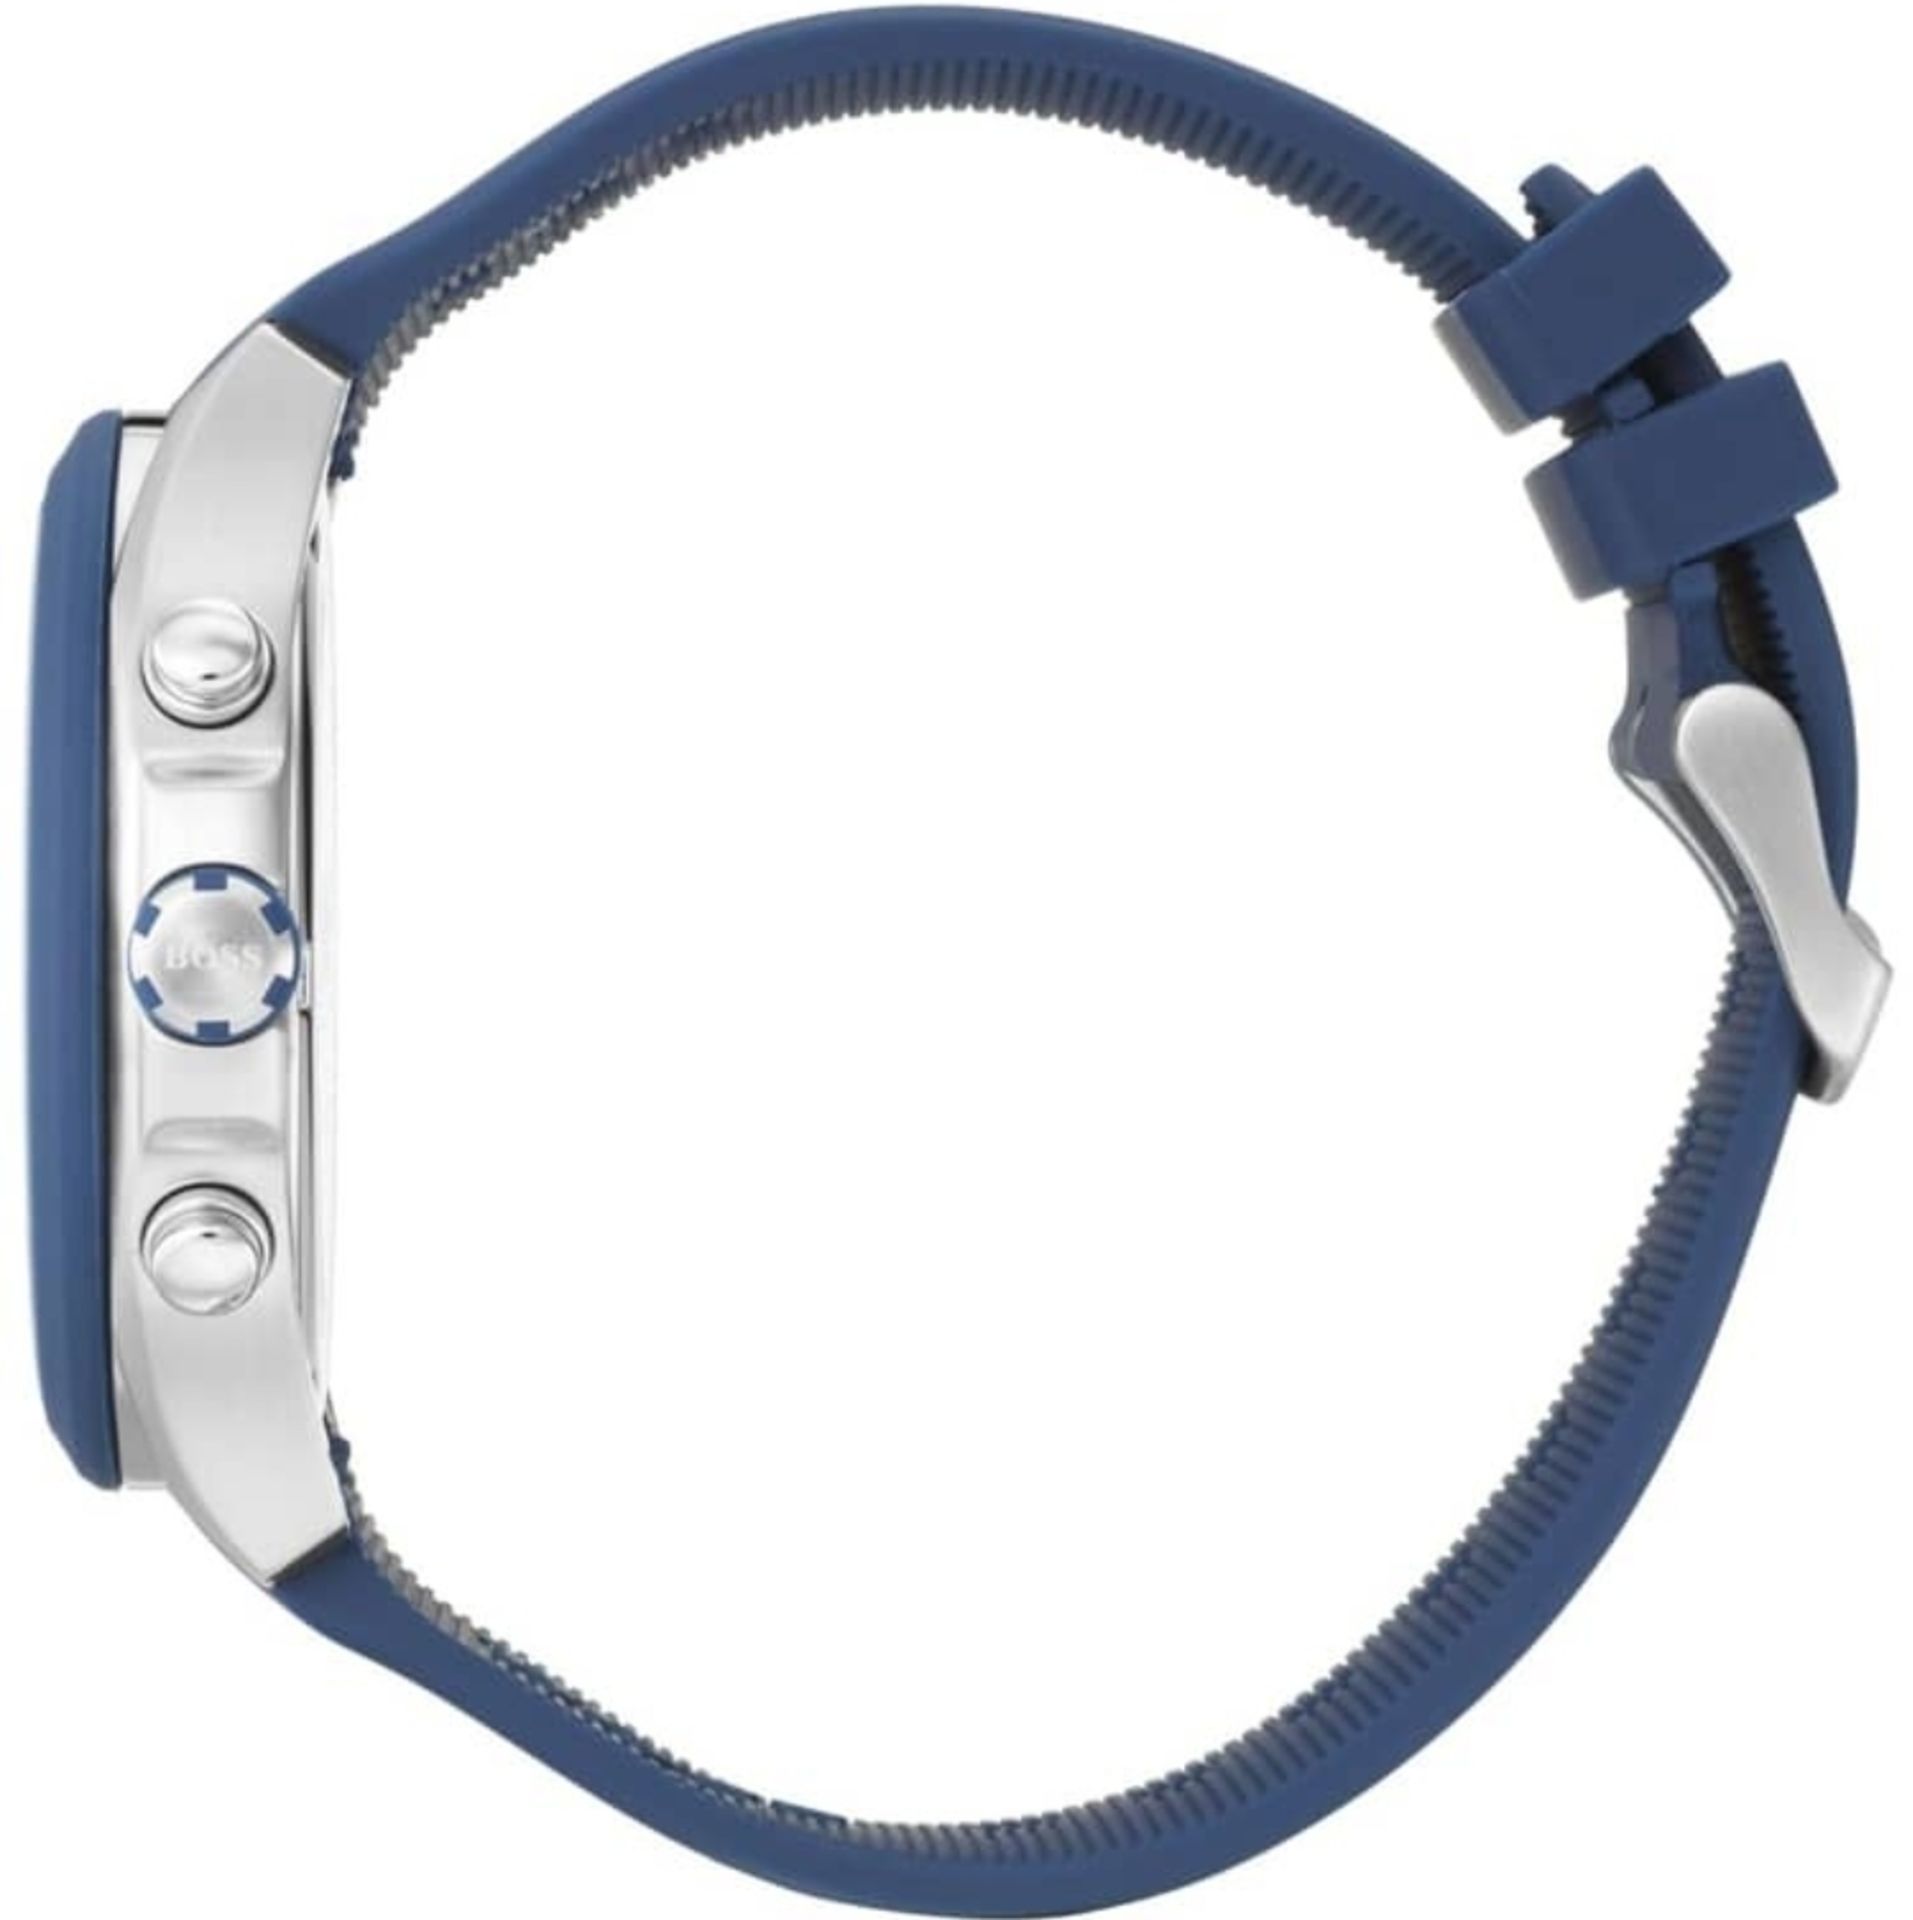 Hugo Boss 1513717 Men's Velocity Blue Rubber Strap Quartz Chronograph Watch - Image 8 of 11